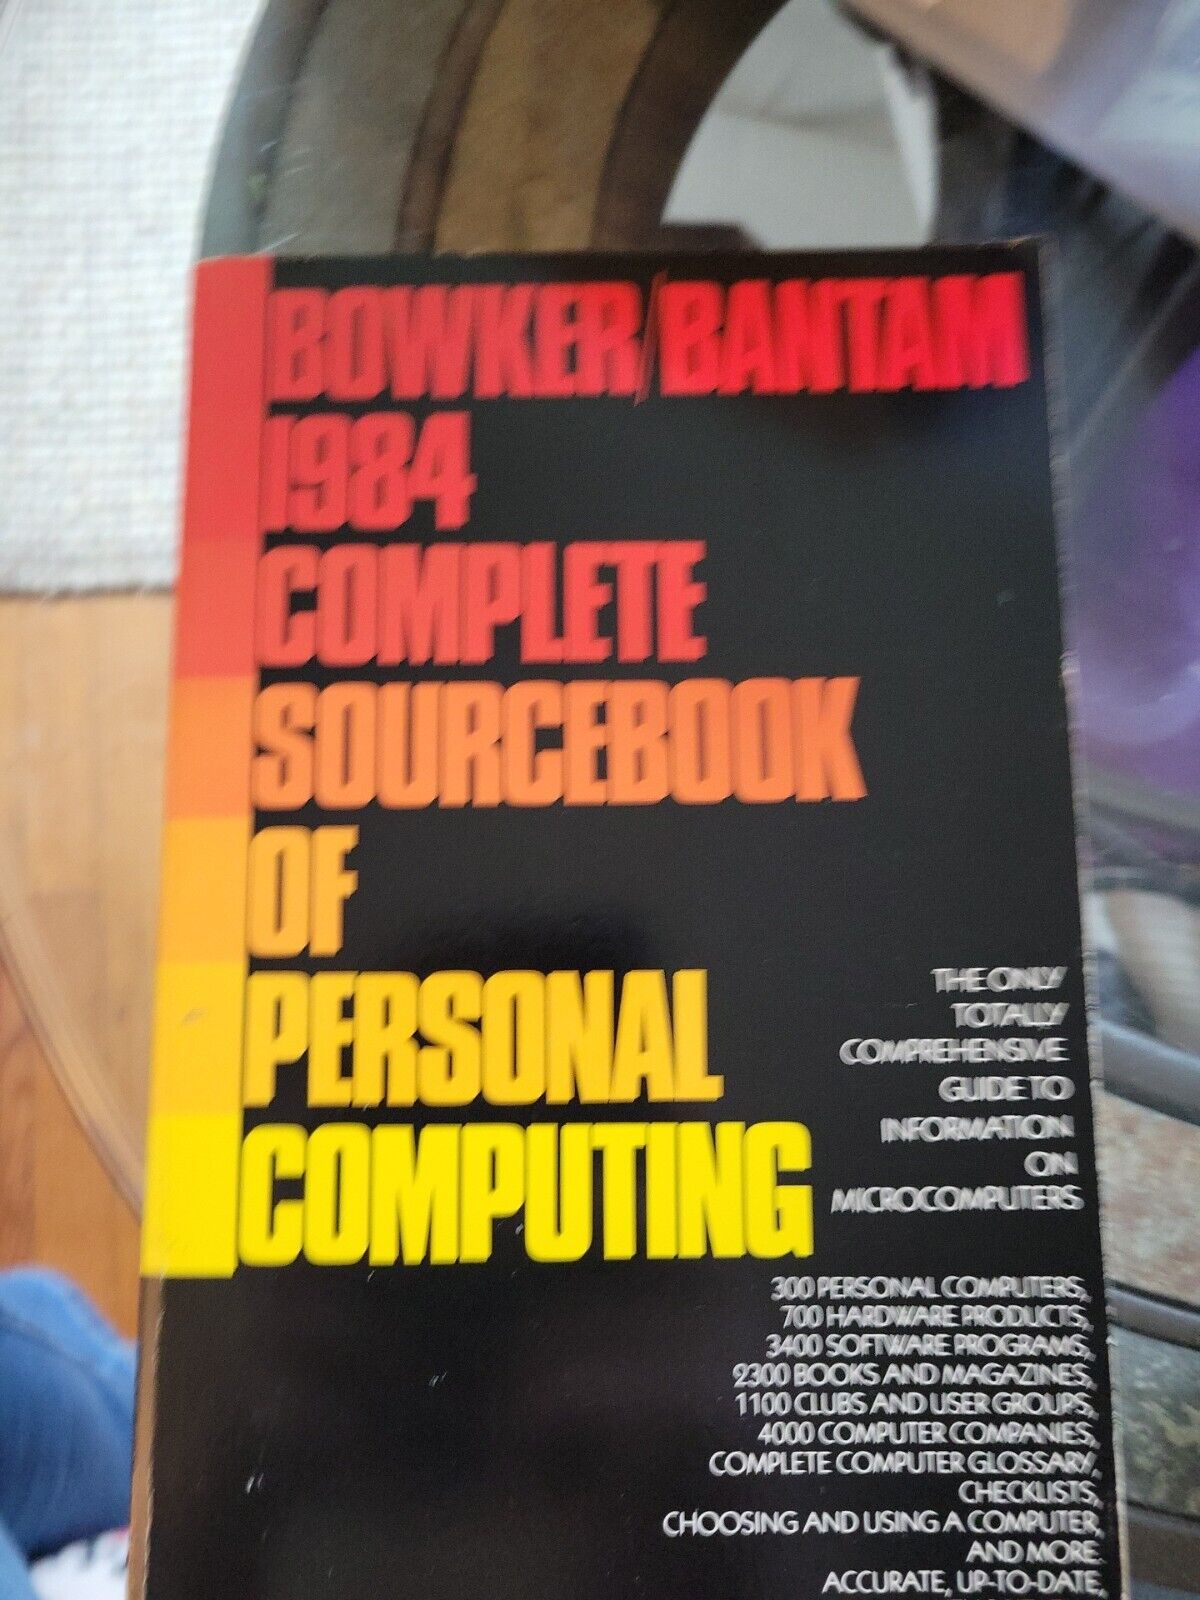 Bowker/Bantam 1984 Complete Sourcebook Of Personal Computing Vintage sc